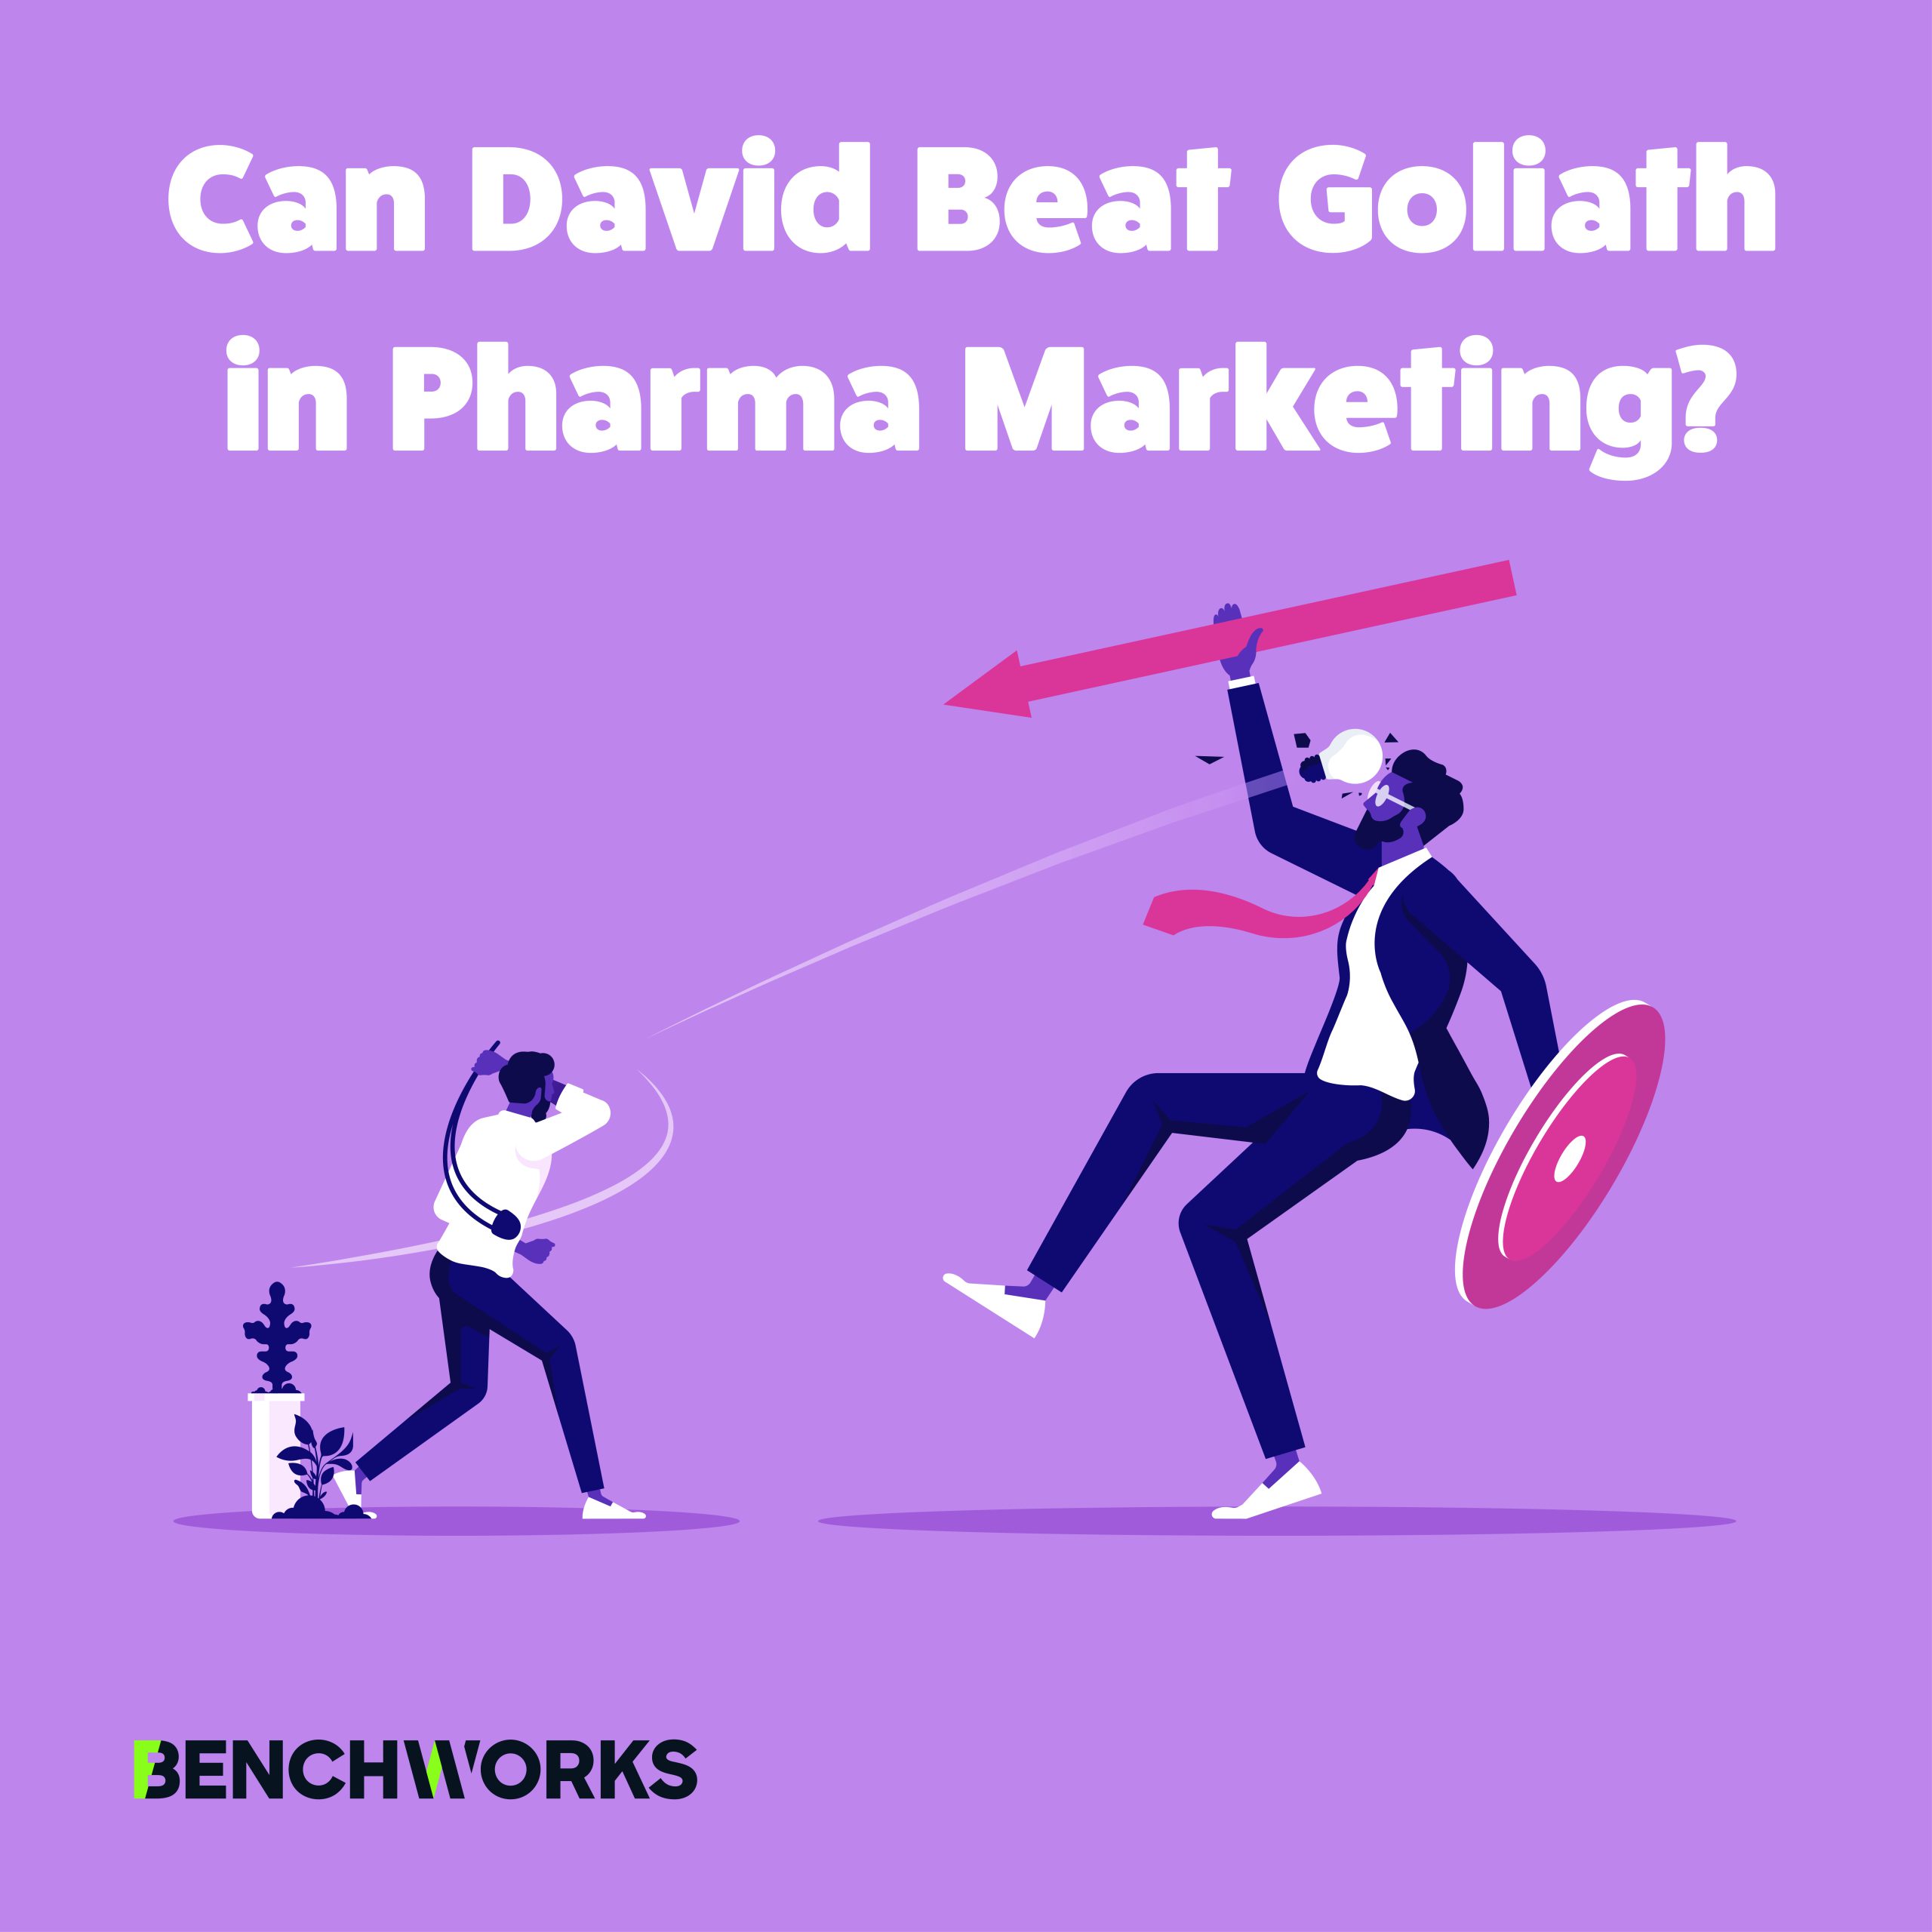 Can David Beat Goliath in Pharma Marketing?